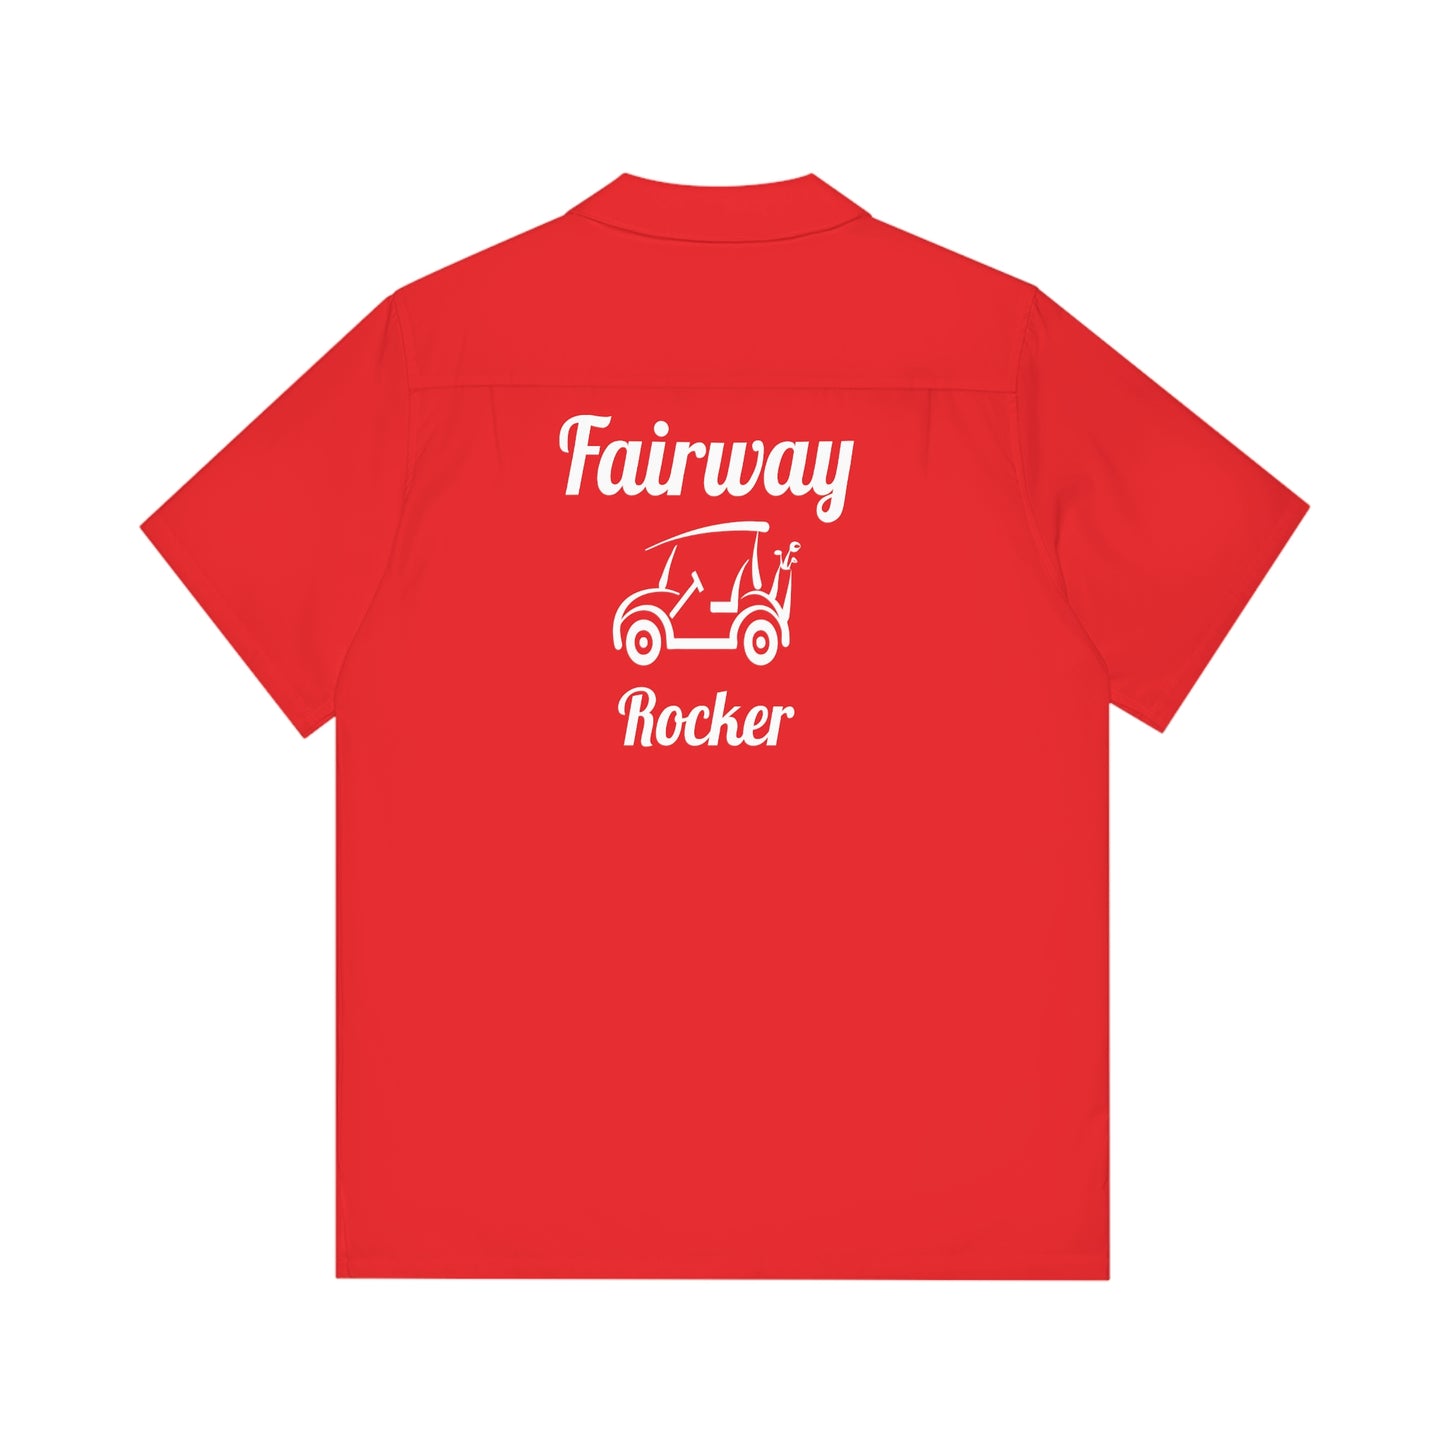 Fairway Rocker - Fairway Shirt / Hemd - red